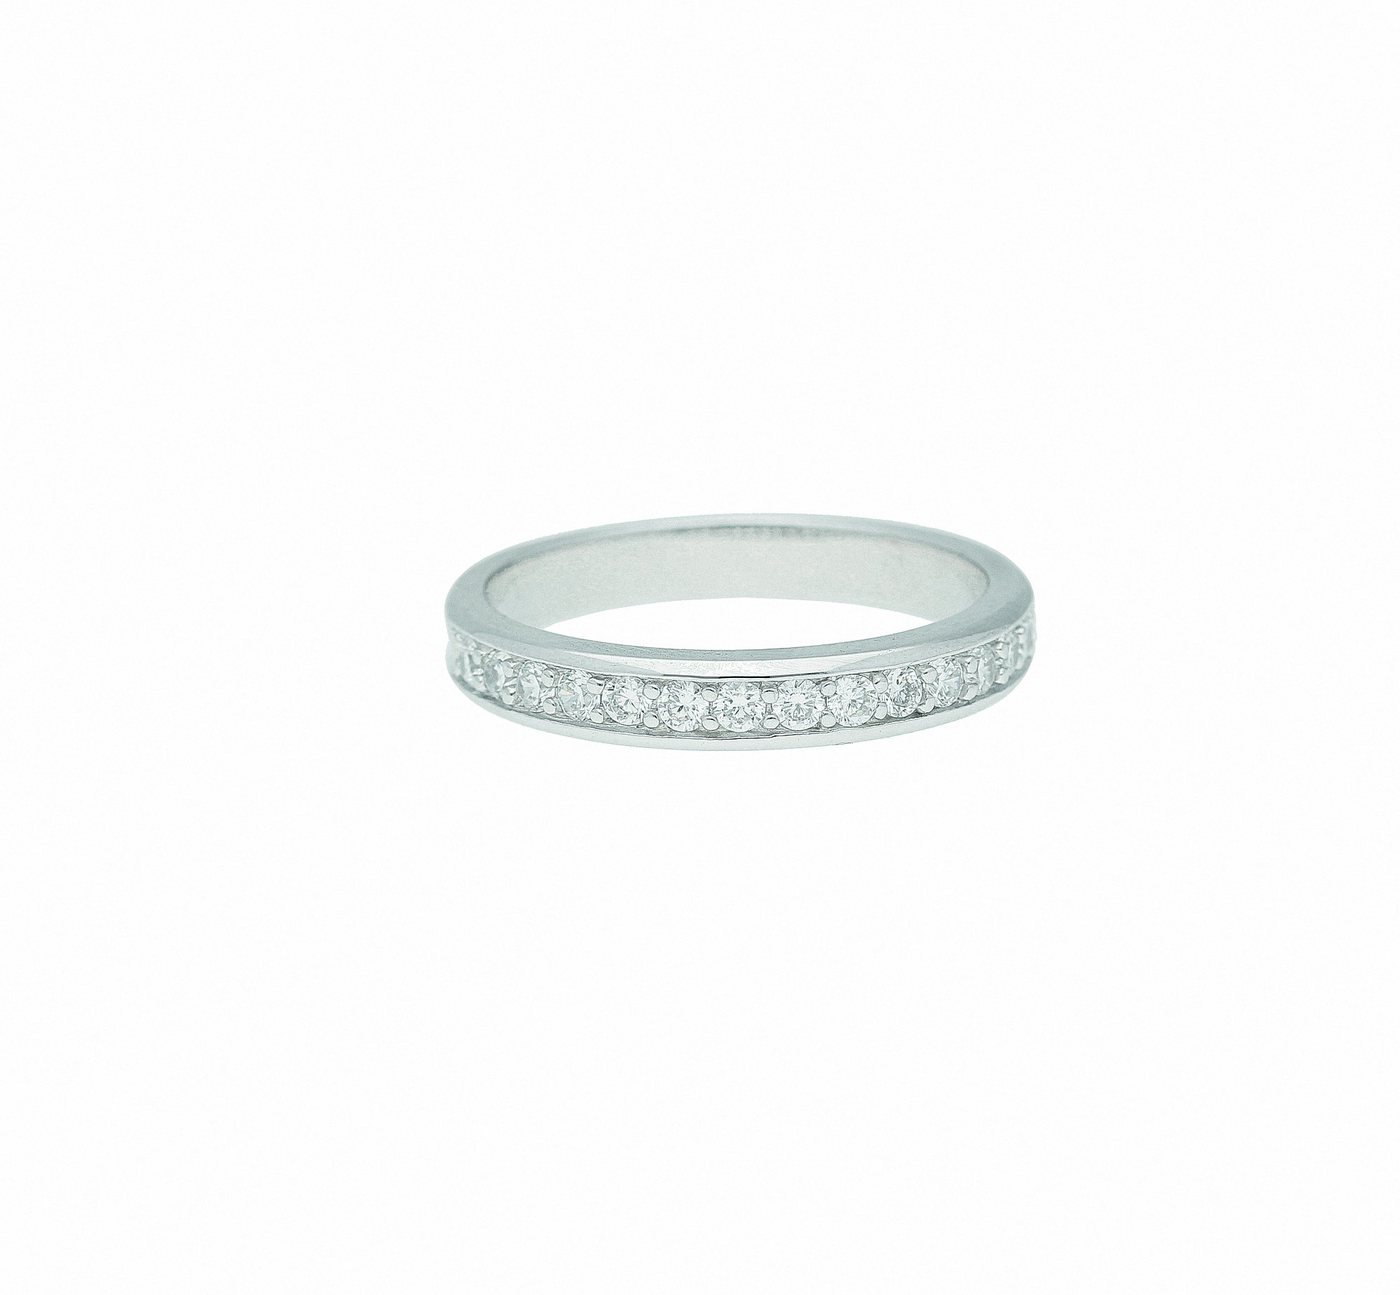 Adelia´s Silberring 925 Silber Ring mit Zirkonia, mit Zirkonia Silberschmuck für Damen von Adelia´s